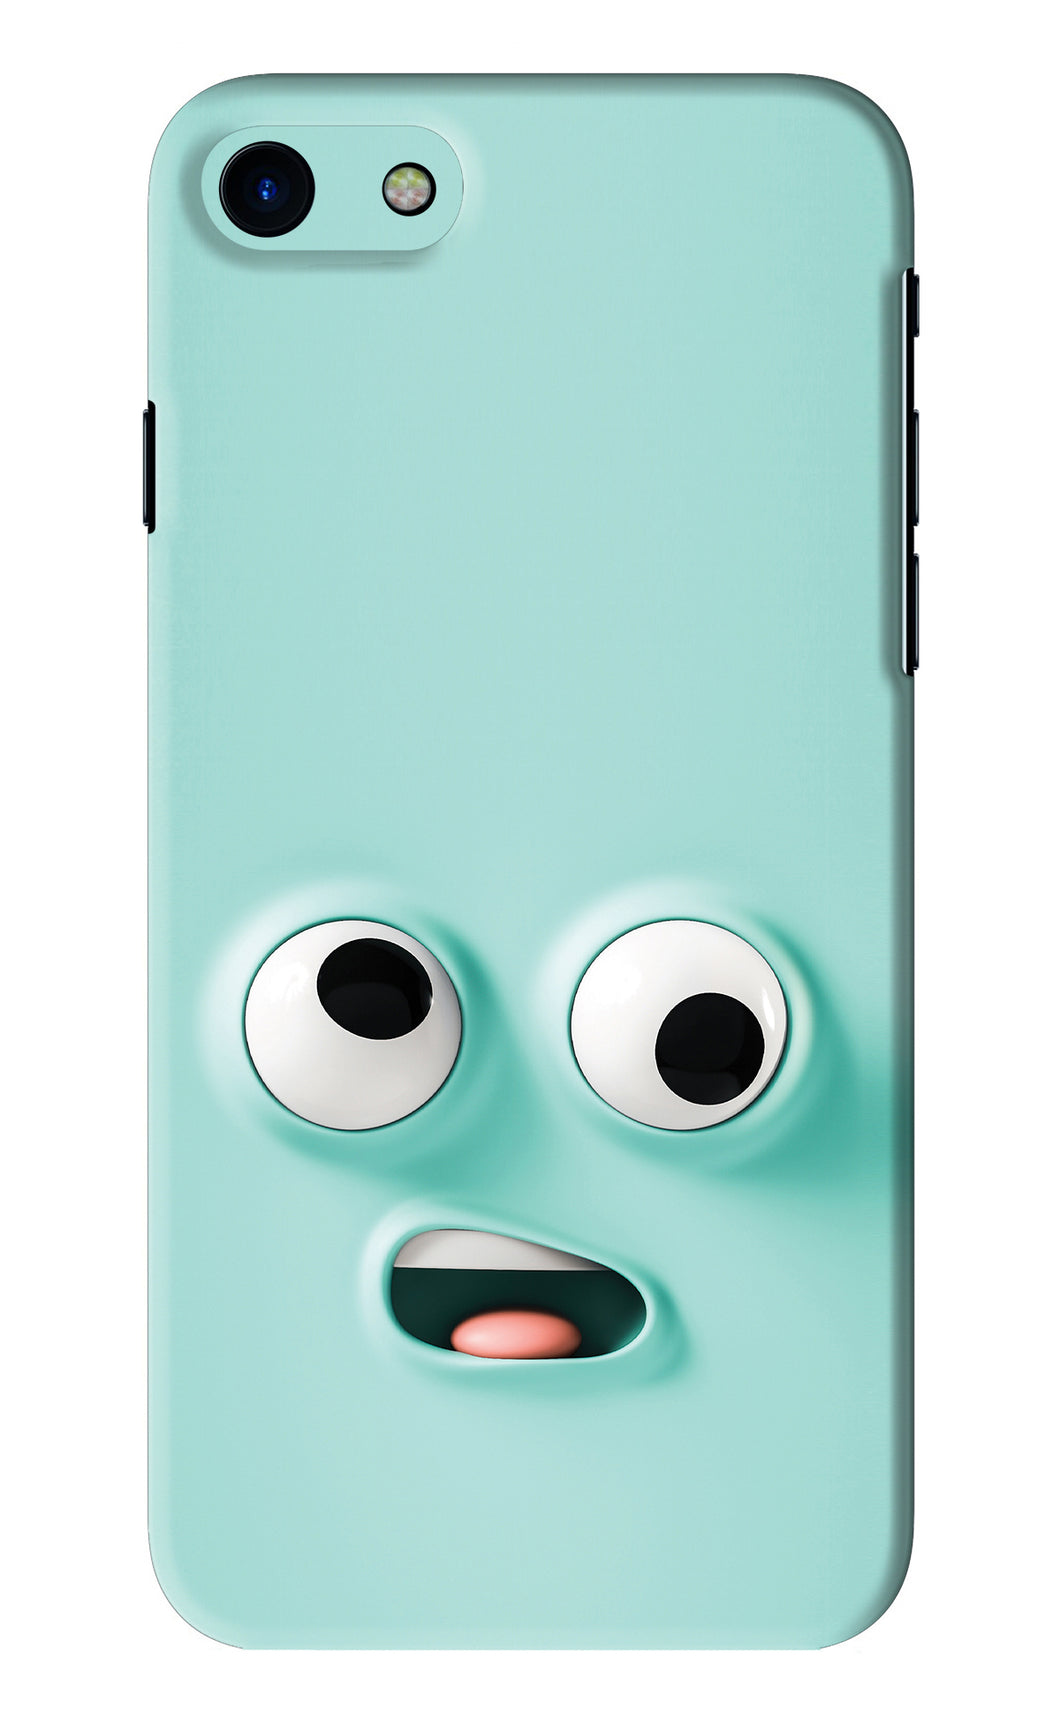 Silly Face Cartoon iPhone SE 2020 Back Skin Wrap